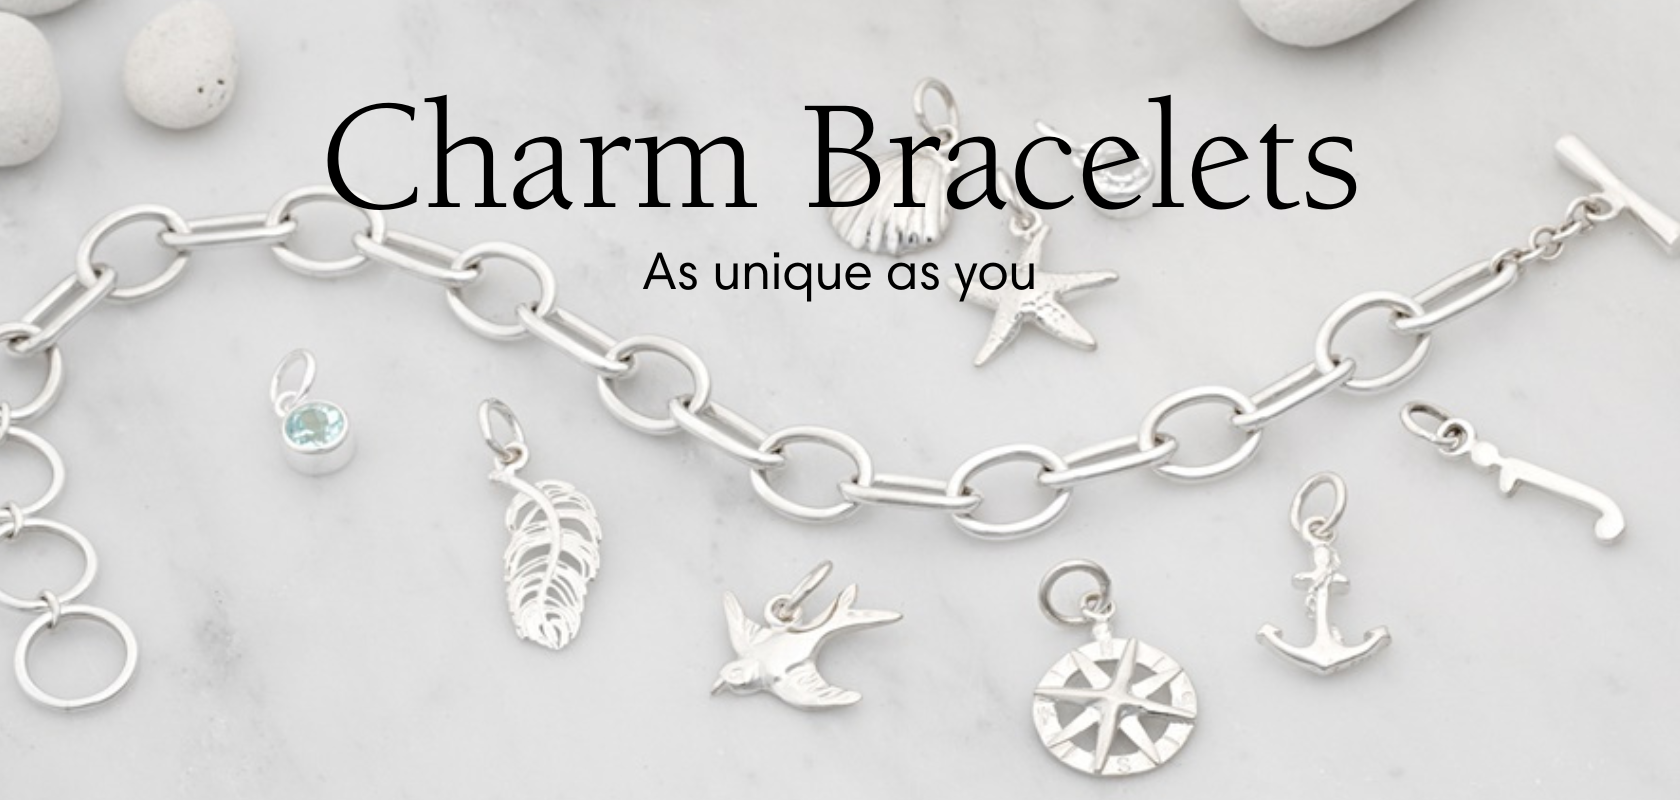 Arrange Your Charms on your bracelet